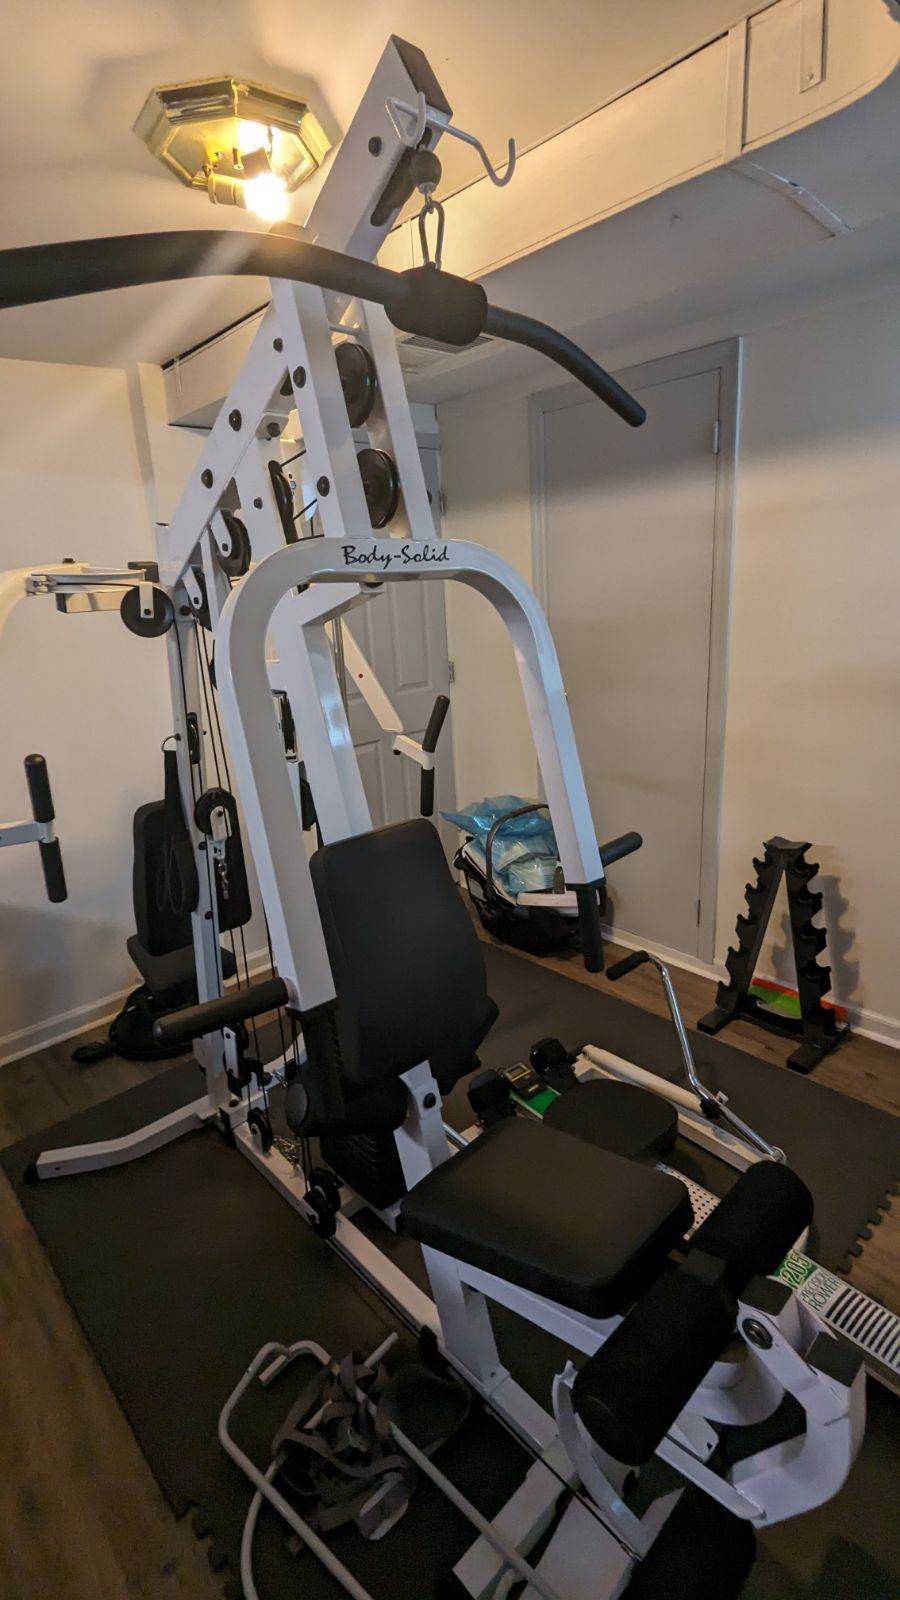 Body Soild EXM2500S Home Gym Workout Station